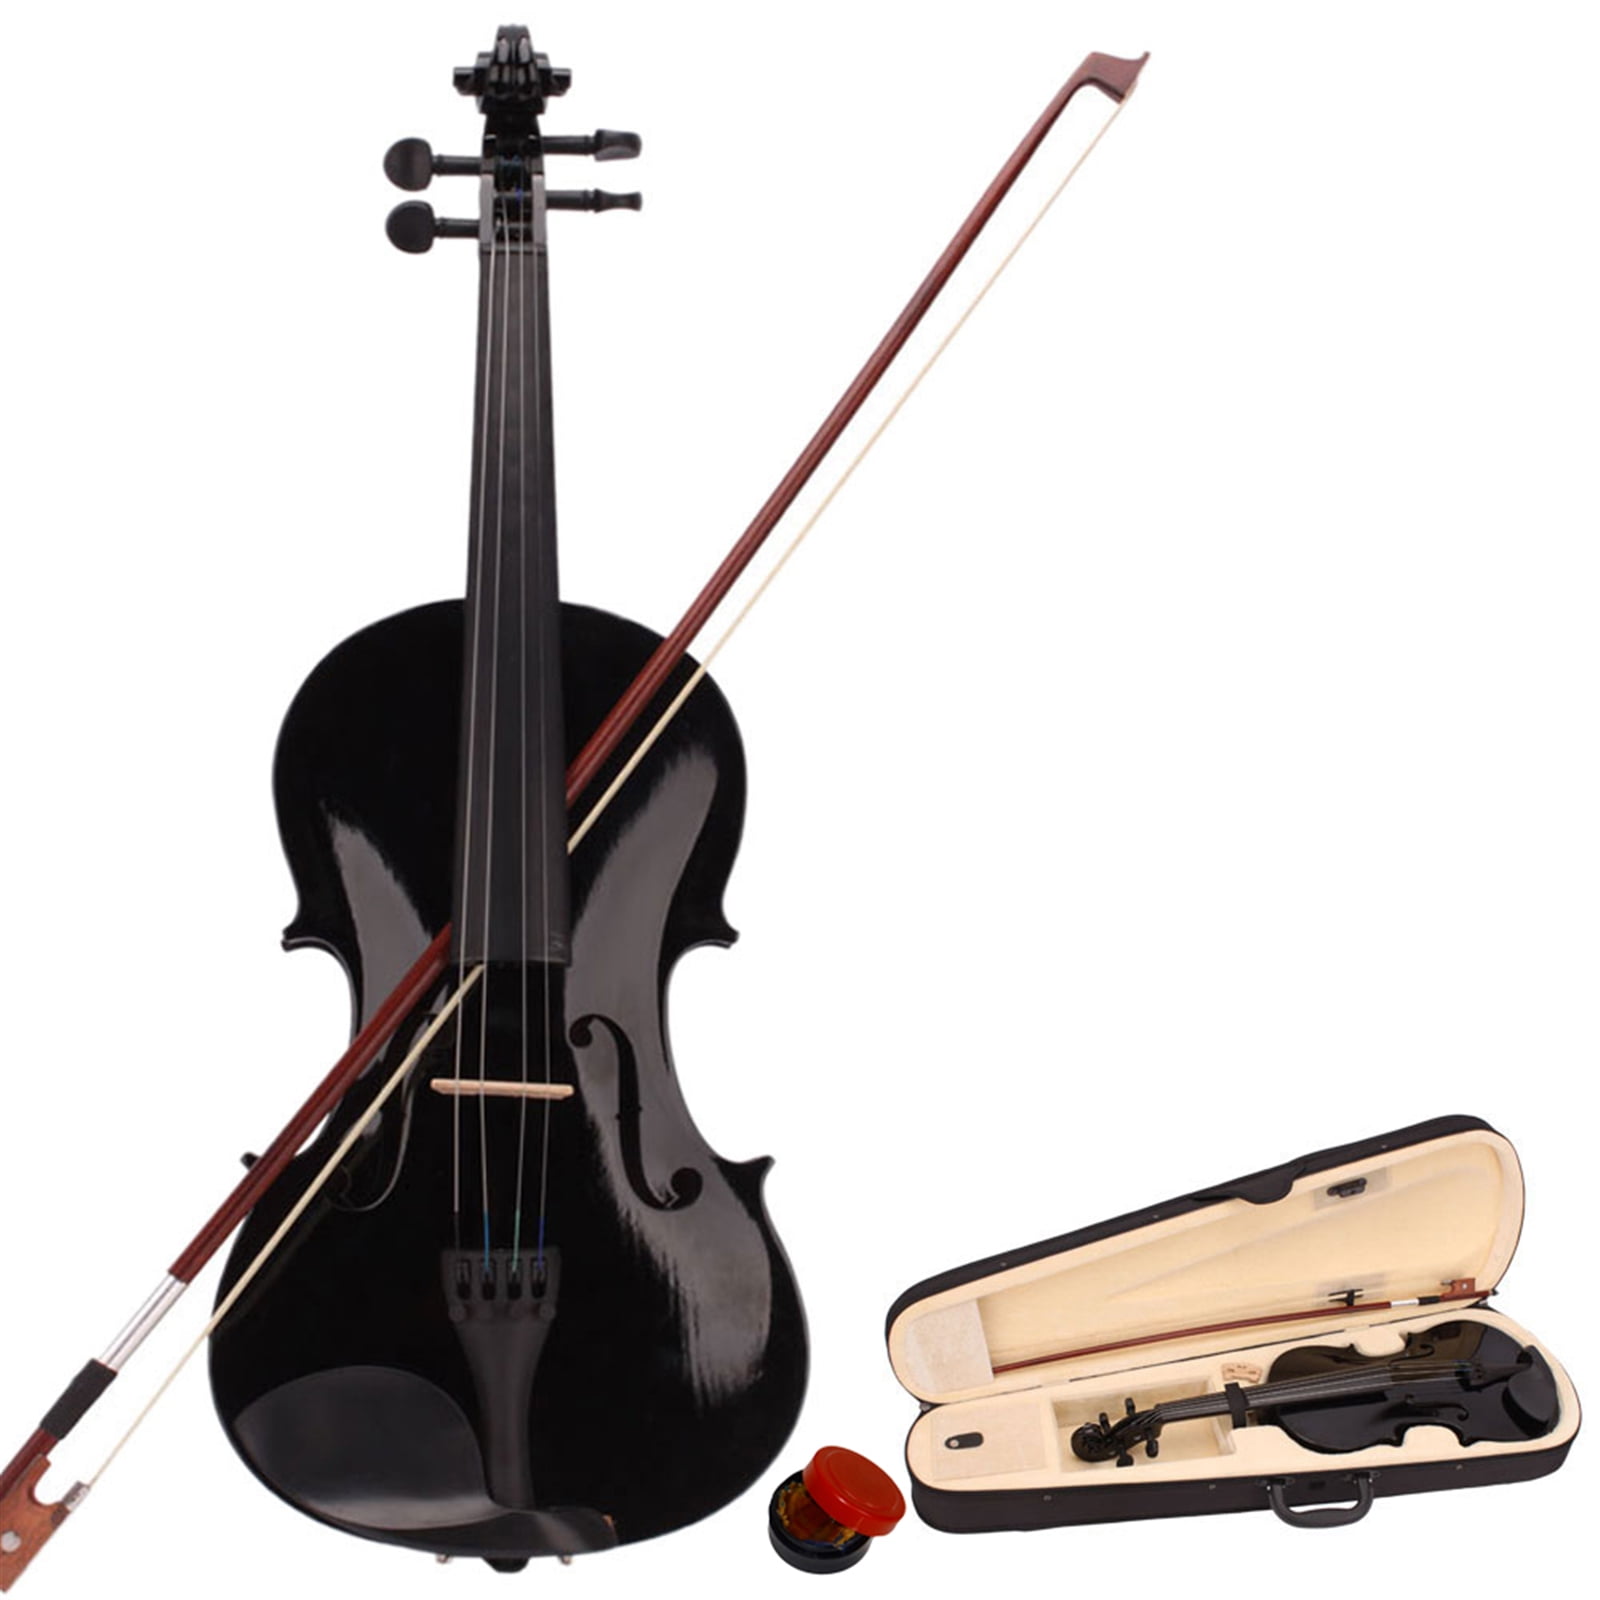 Takefuns 4/4 Rosewood Round Stick Violoncello Cello Bow Brown